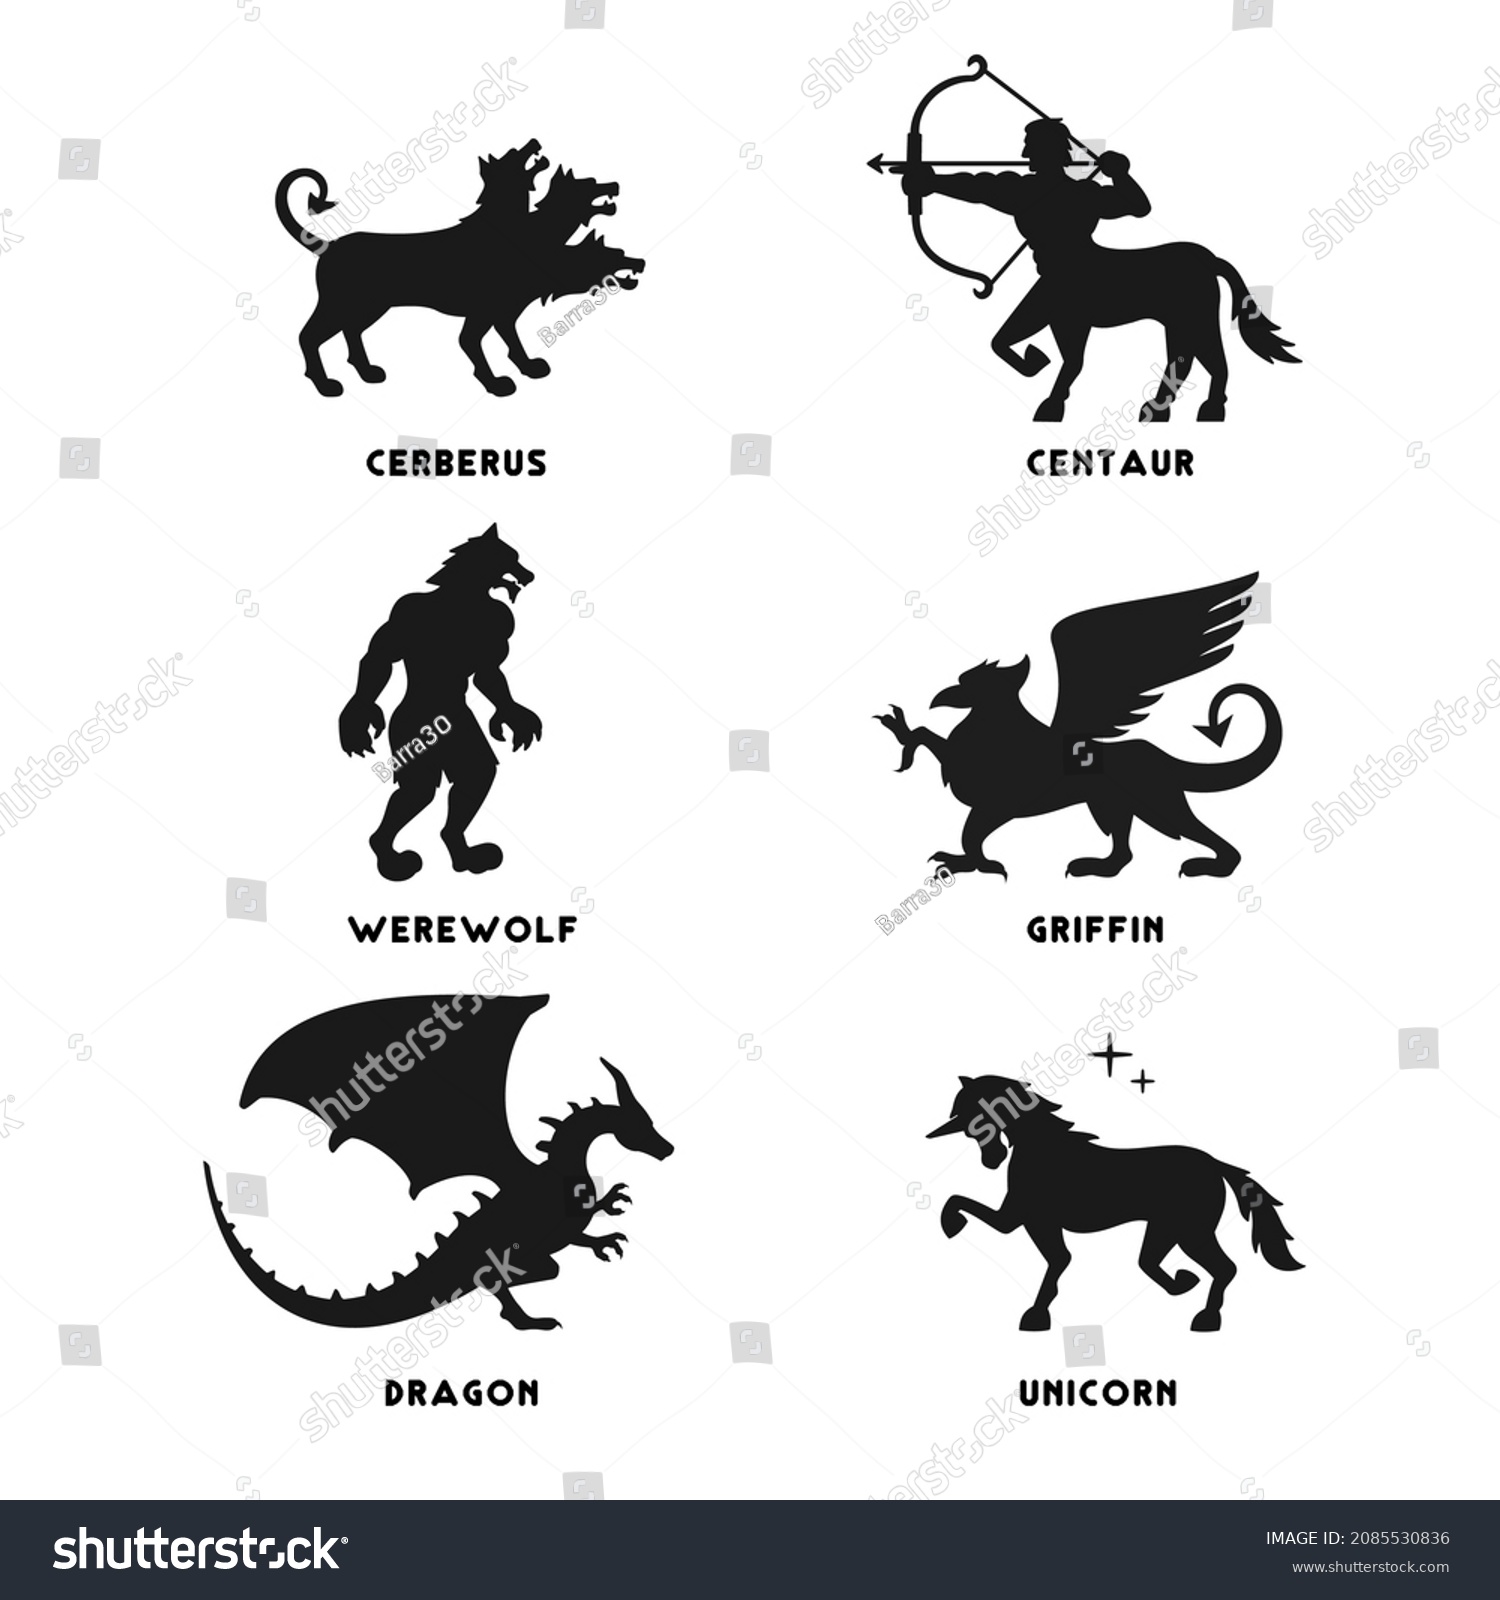 SVG of set of mythical creature icon unicorn werewolf dragon cerberus griffin centaur svg